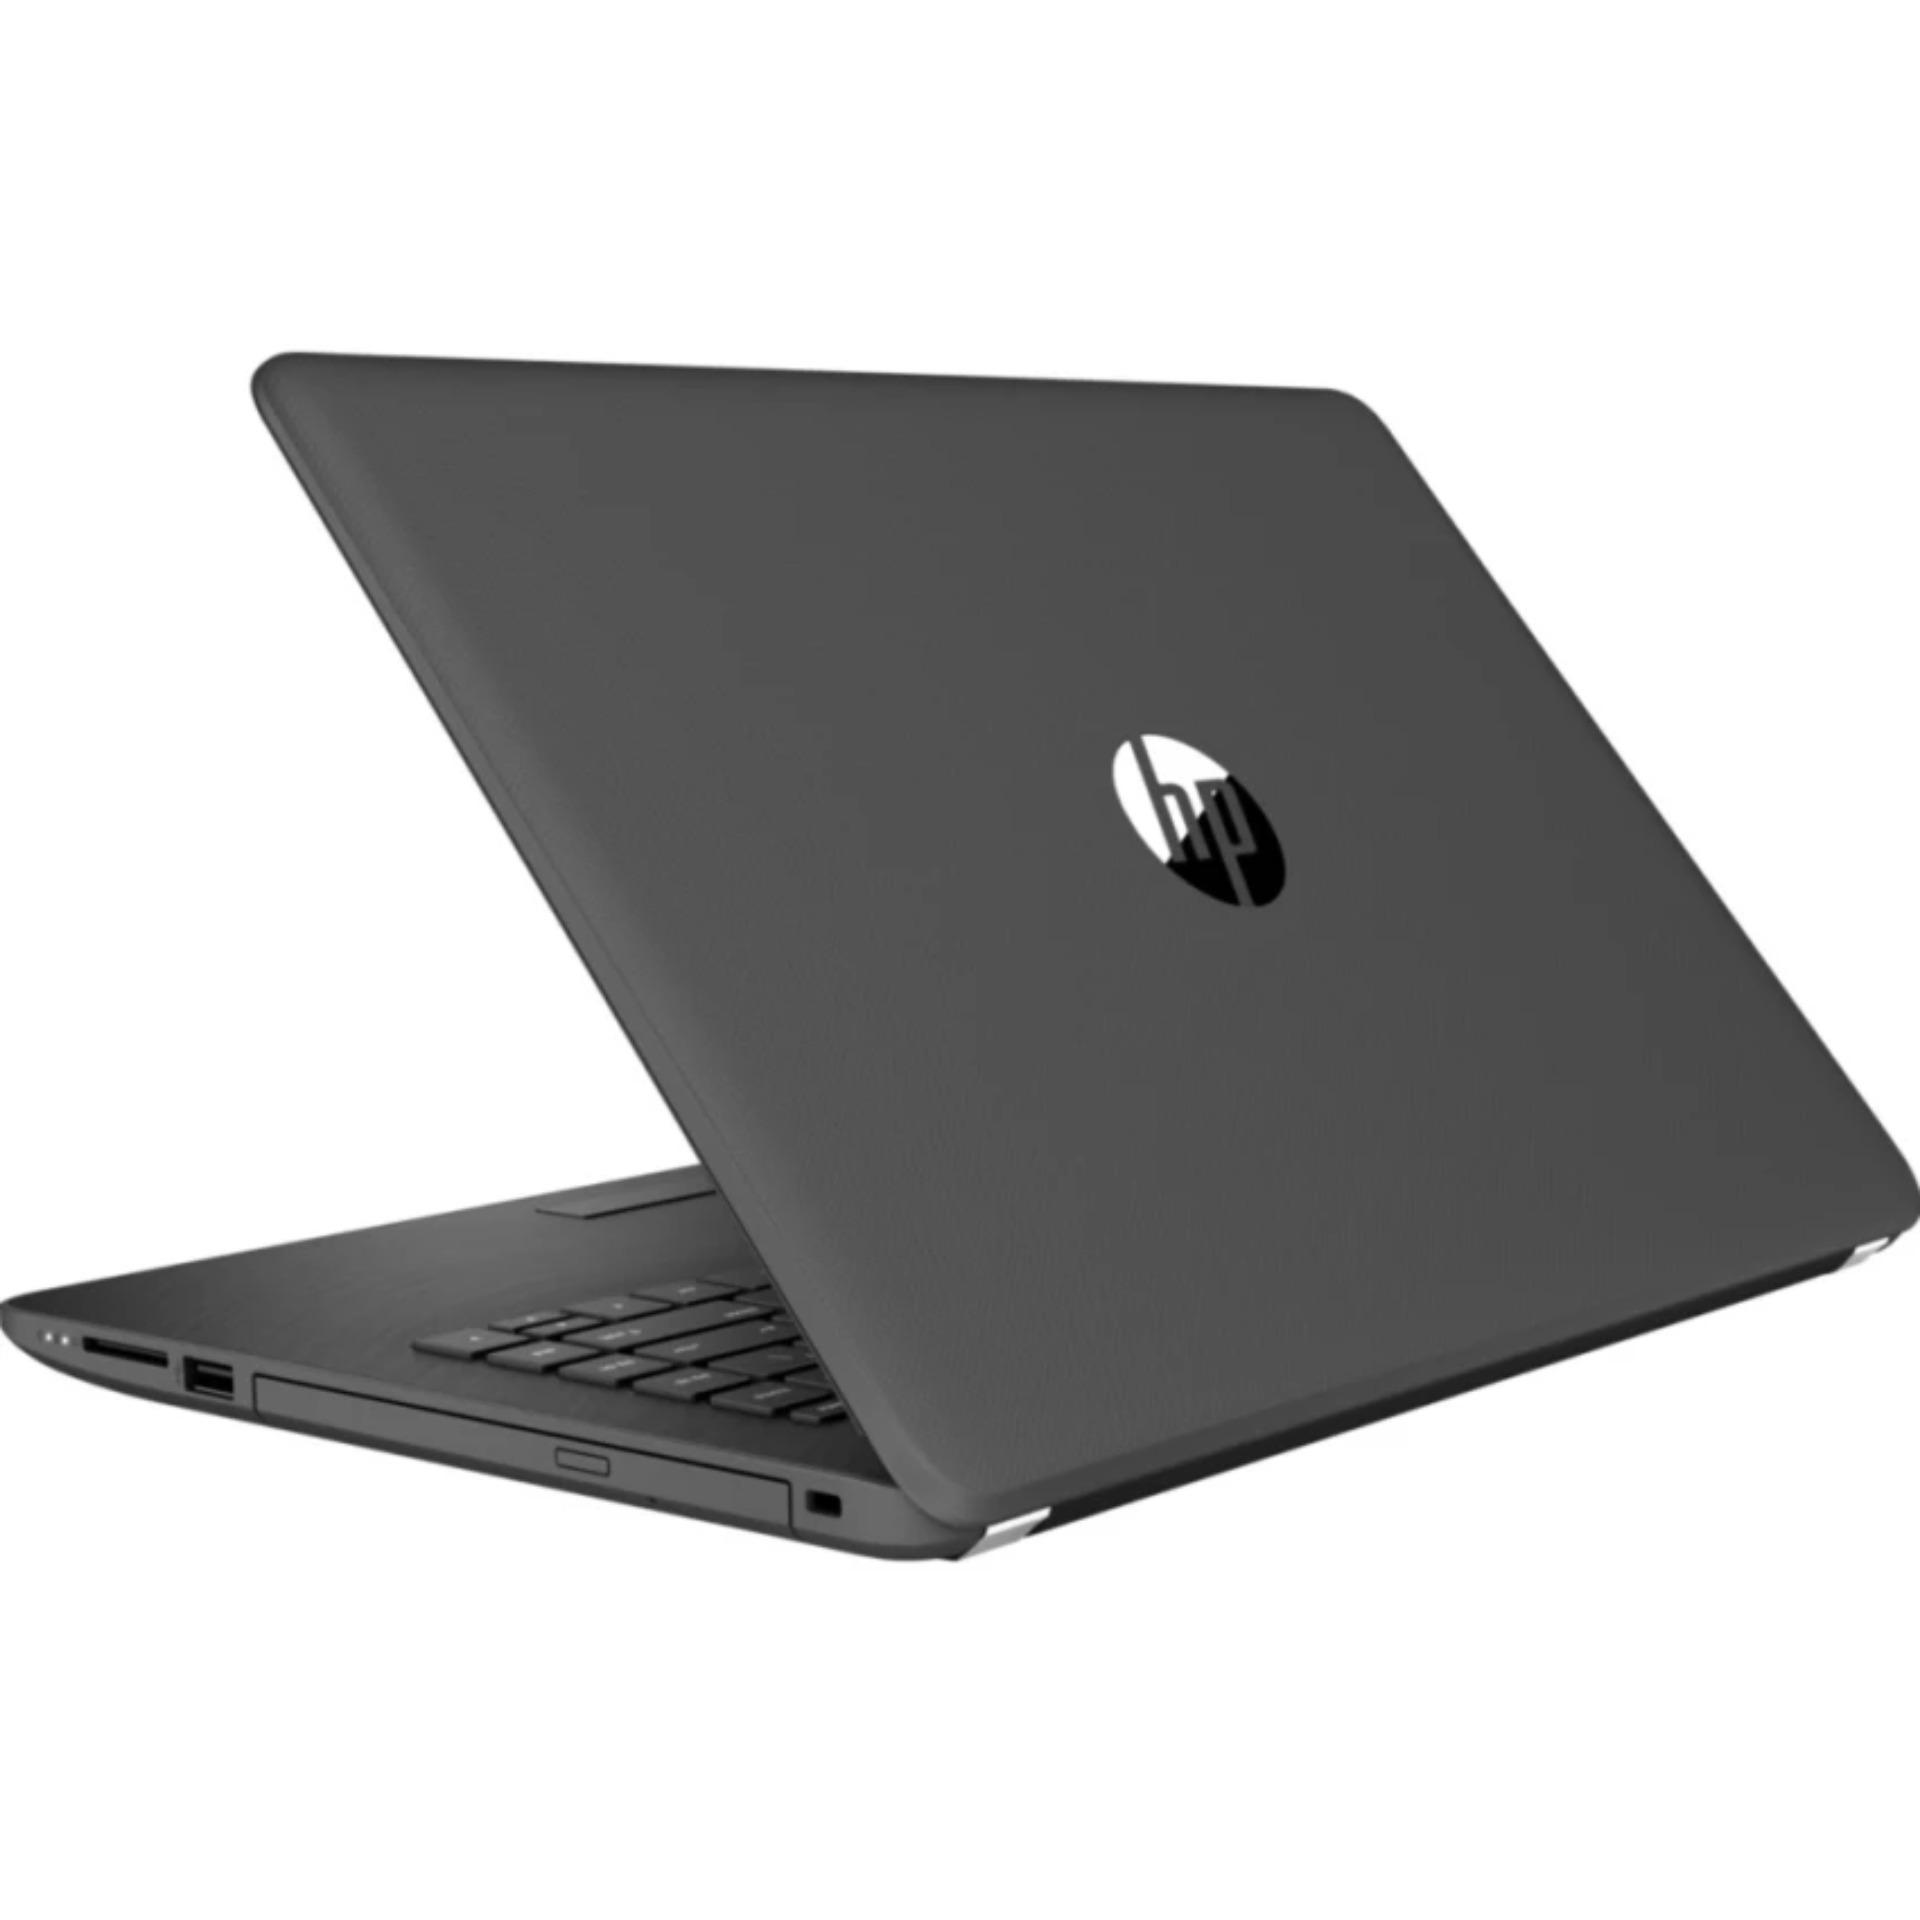 HP Notebook - 14-bw017 - AMD A9 9420 - RAM 8GB -DVD - 500GB - ATI RADEON R5 2GB - 14\